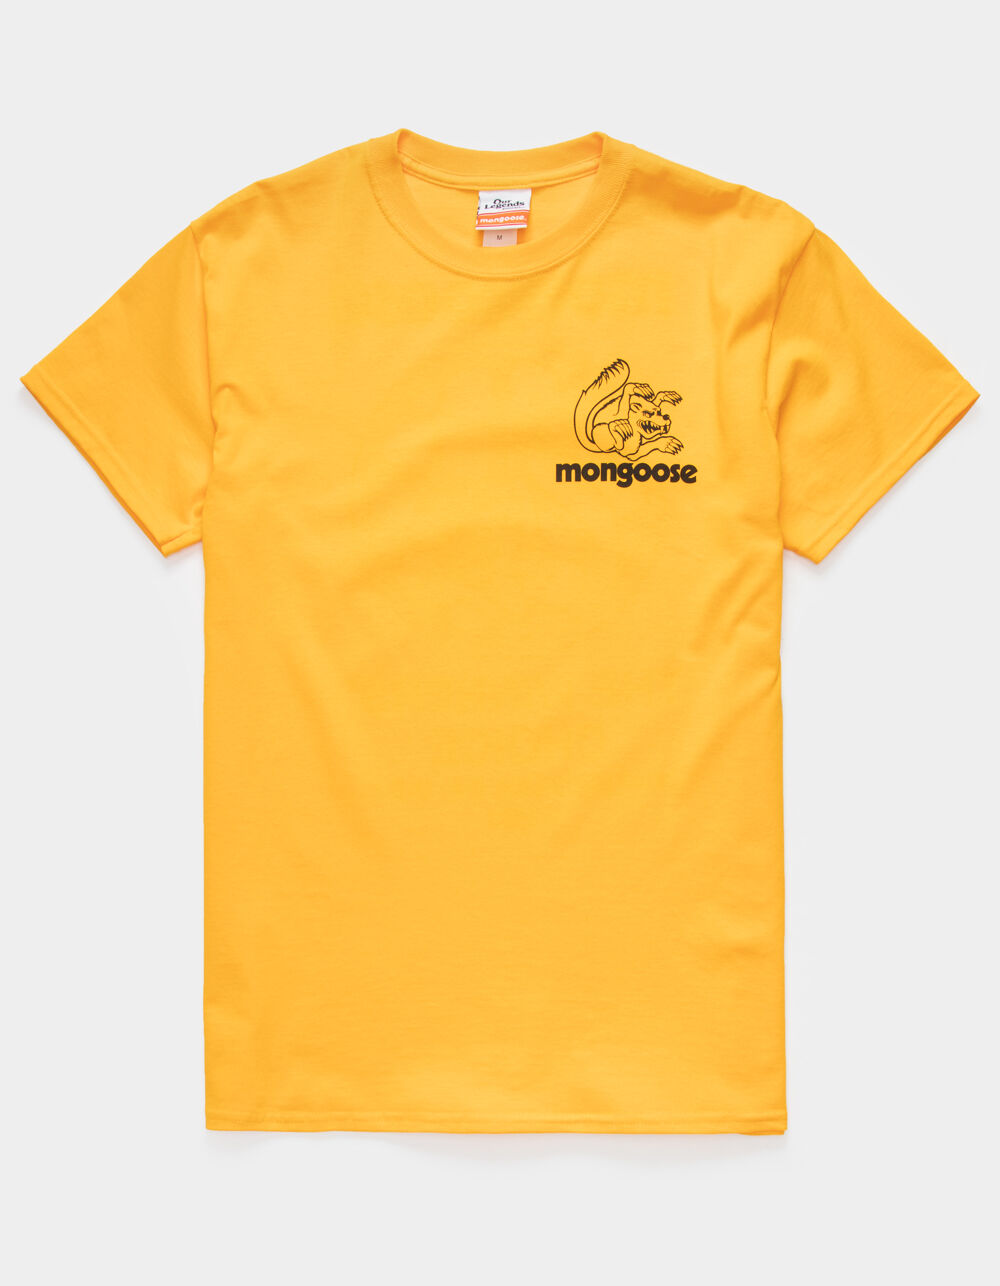 OUR LEGENDS Mongoose Motto Mens T-Shirt - GOLD | Tillys